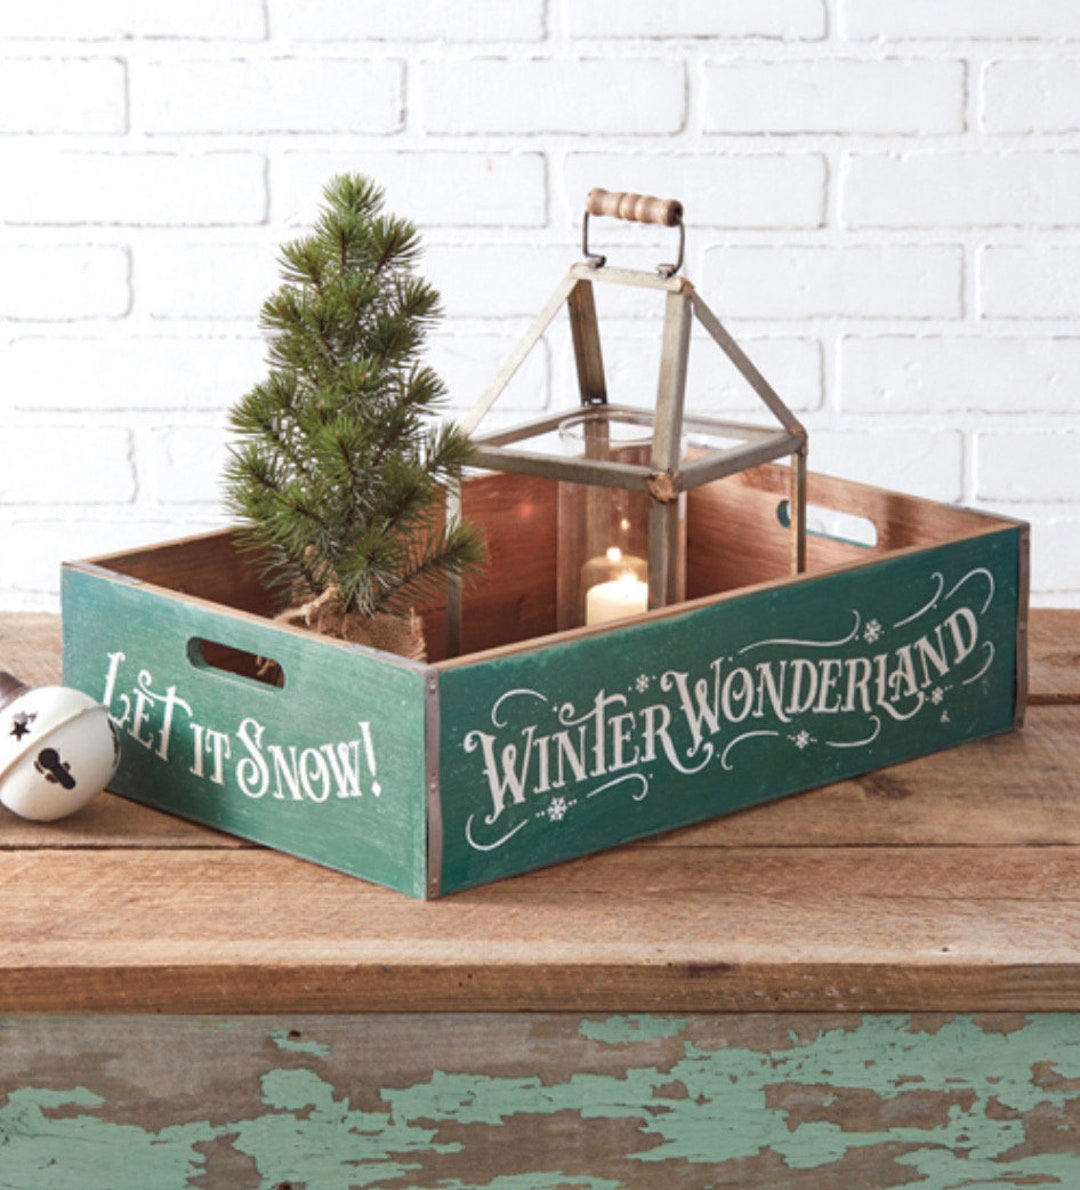 Kinetic Holiday Winter Wonderland 12-pc Food Storage Set